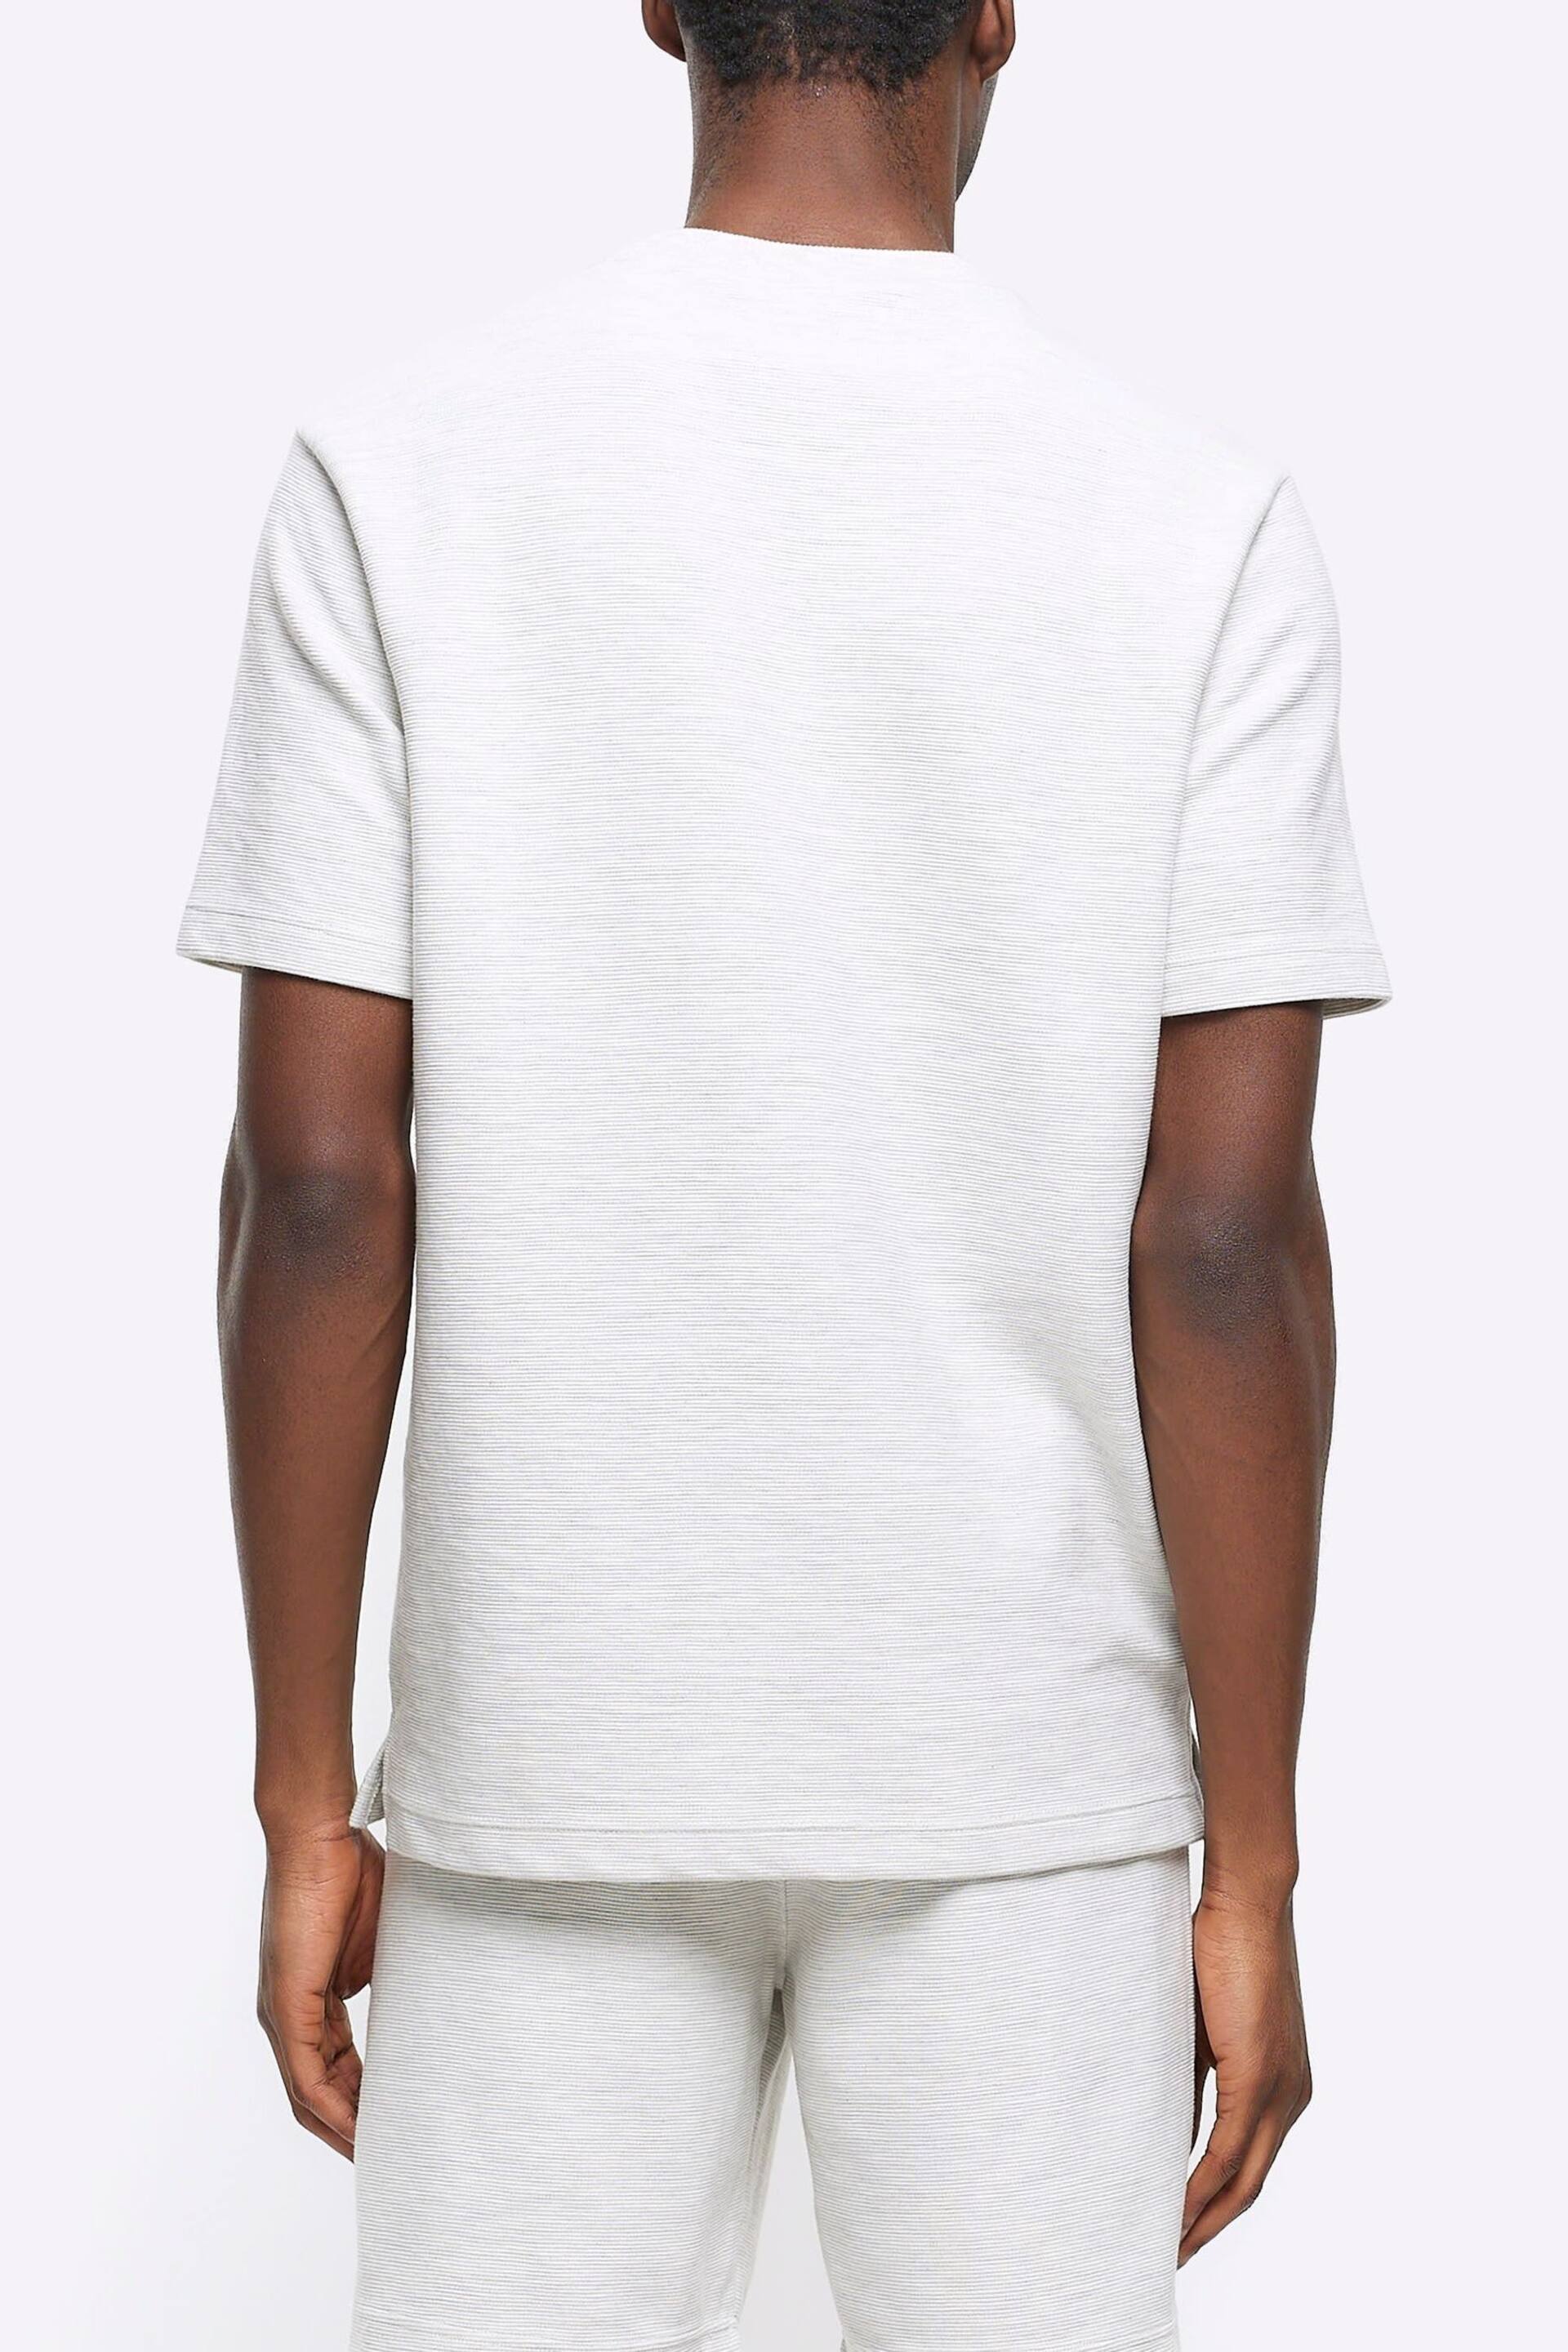 River Island Grey Regular Fit Smart T-Shirt - Image 2 of 5